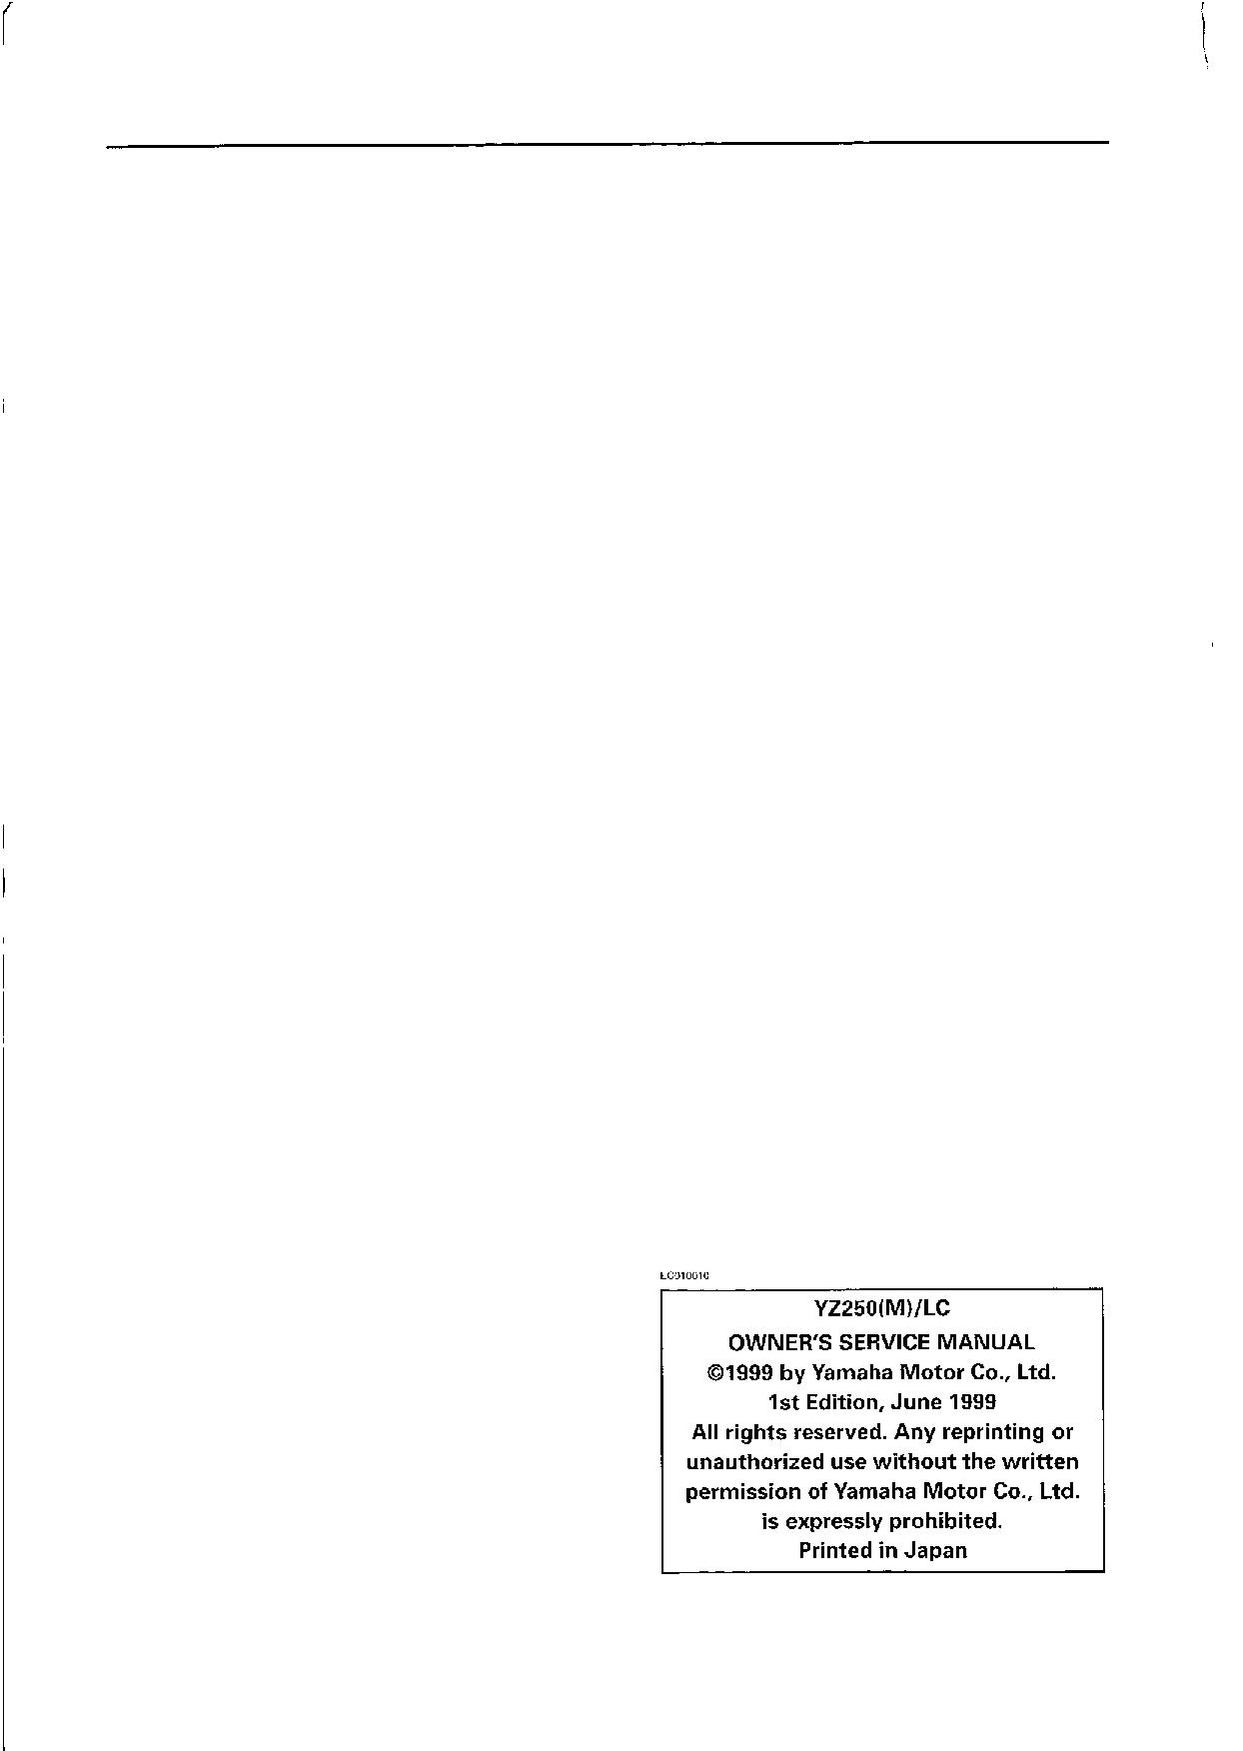 File:2000 Yamaha YZ250 M LC Owners Service Manual.pdf